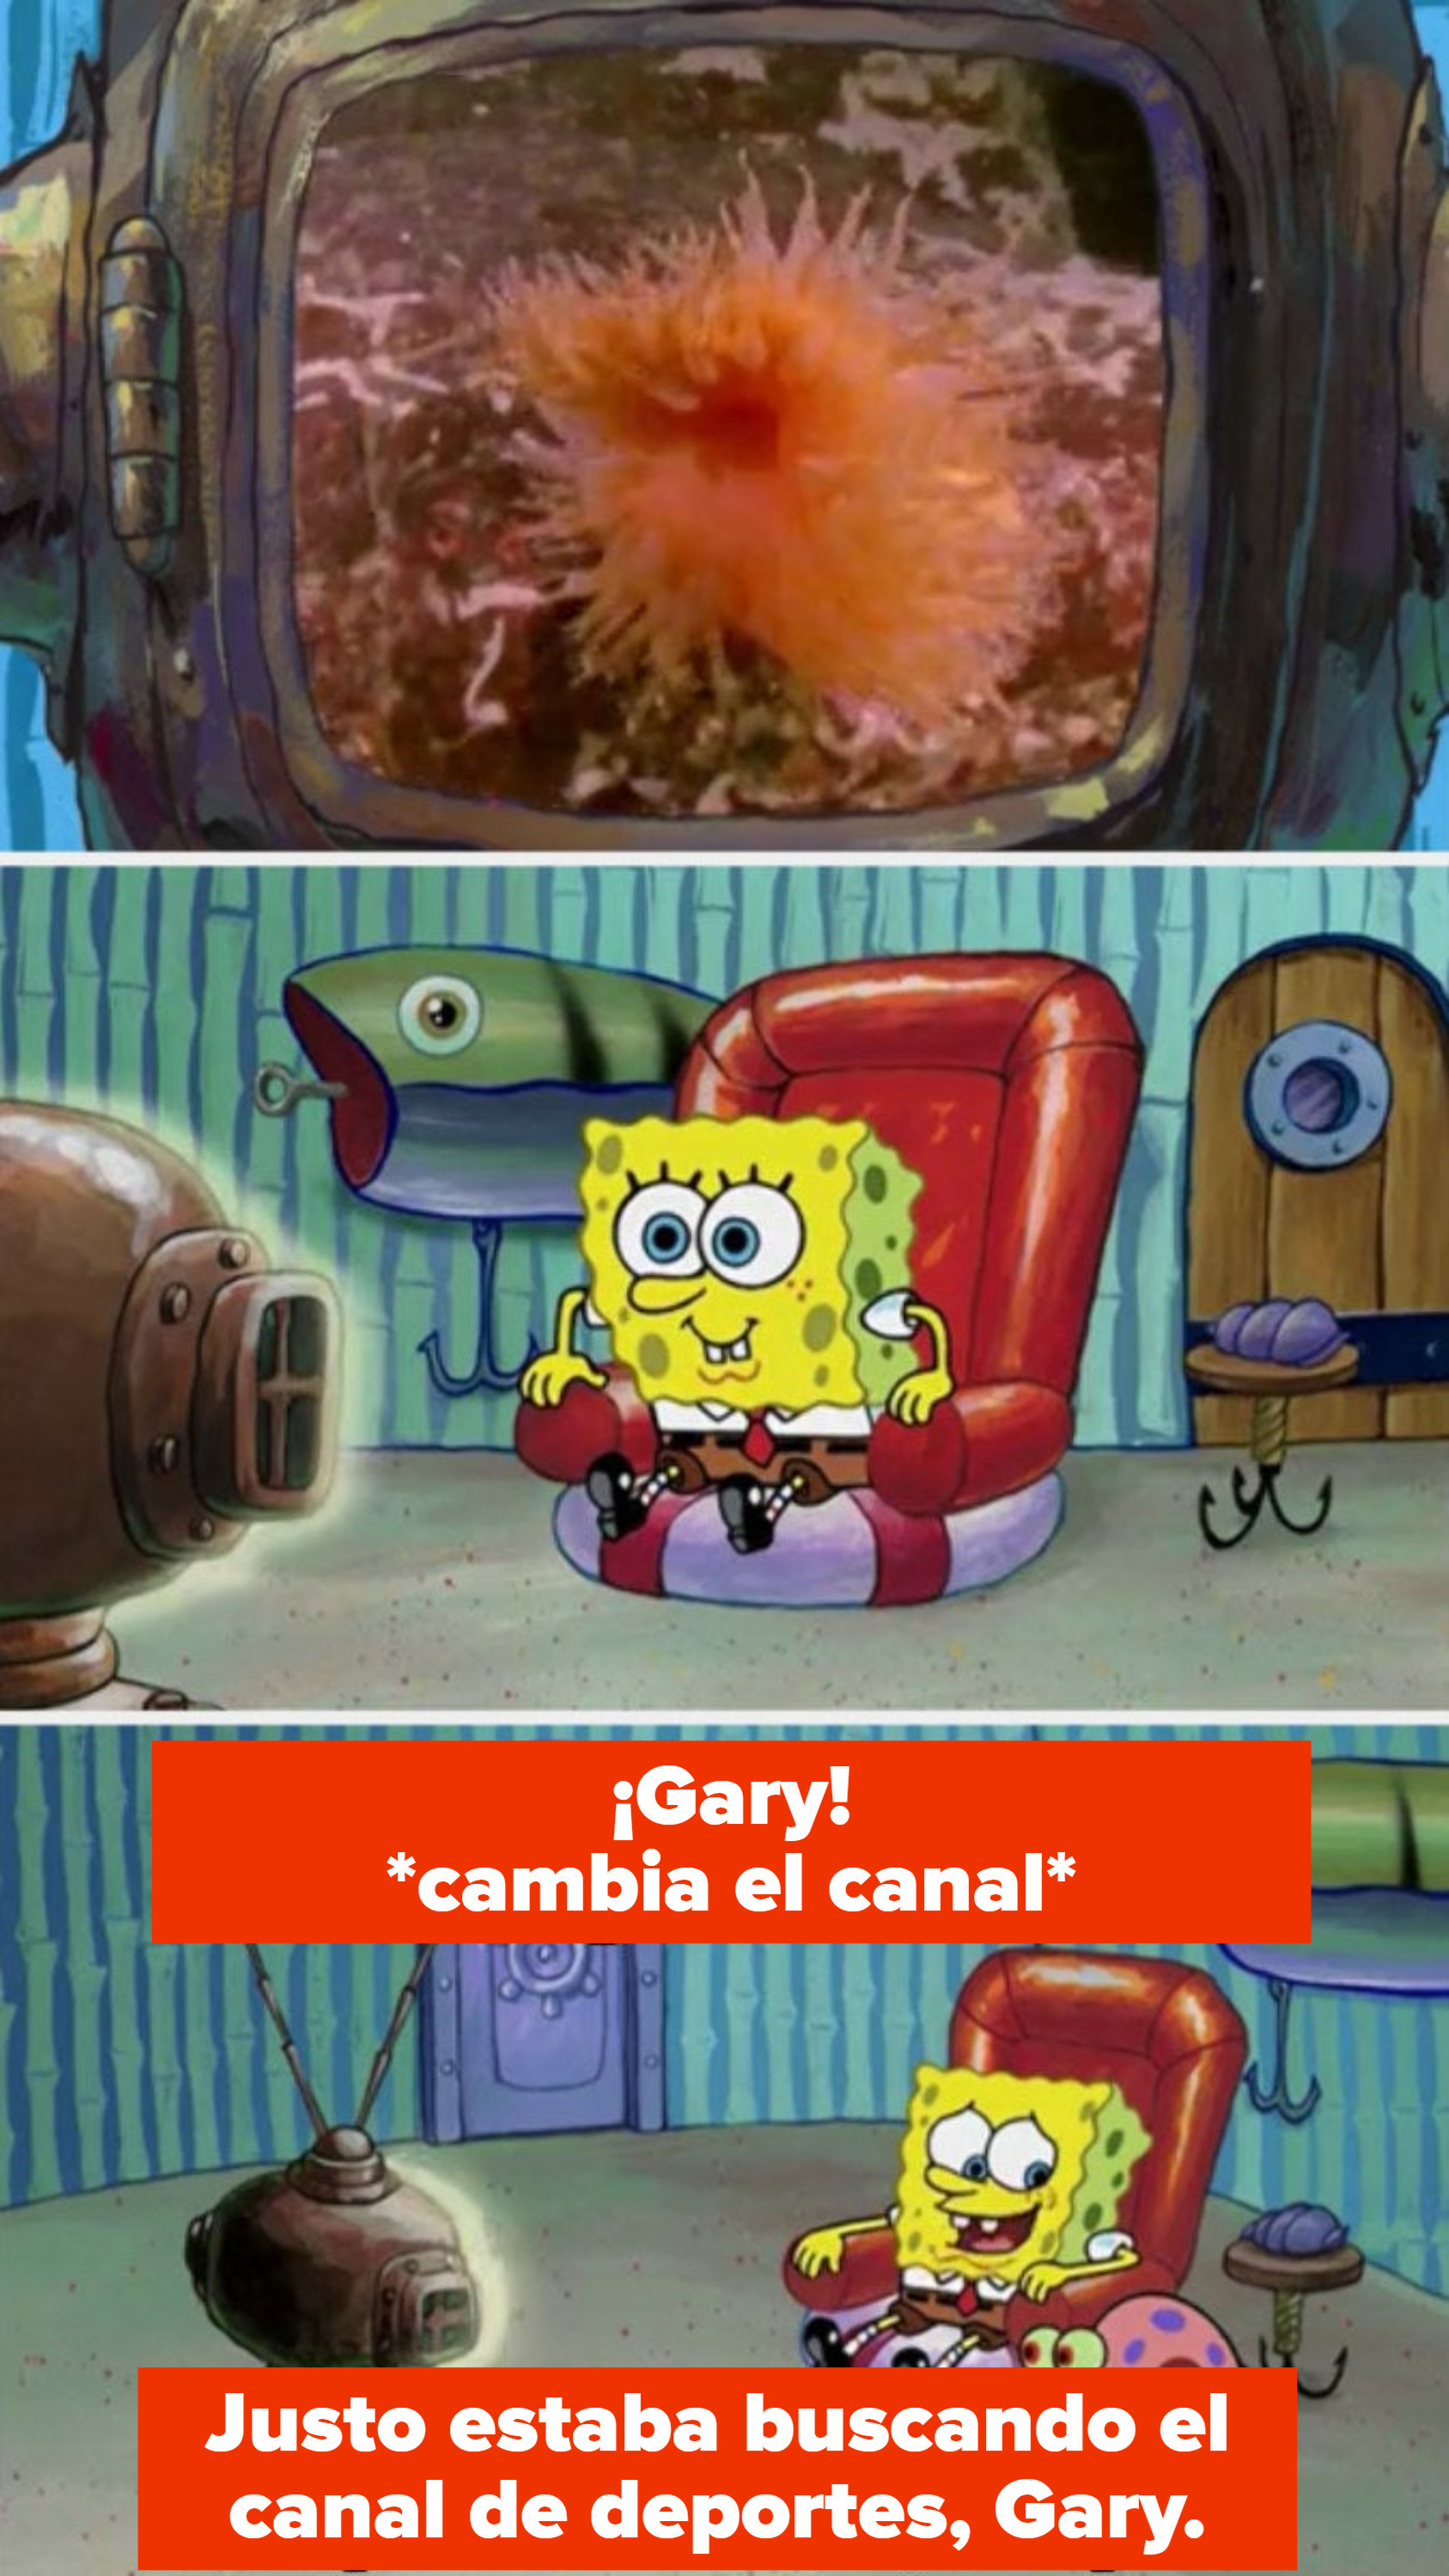 Spongebob rapidly changes the channel when Gary walks in